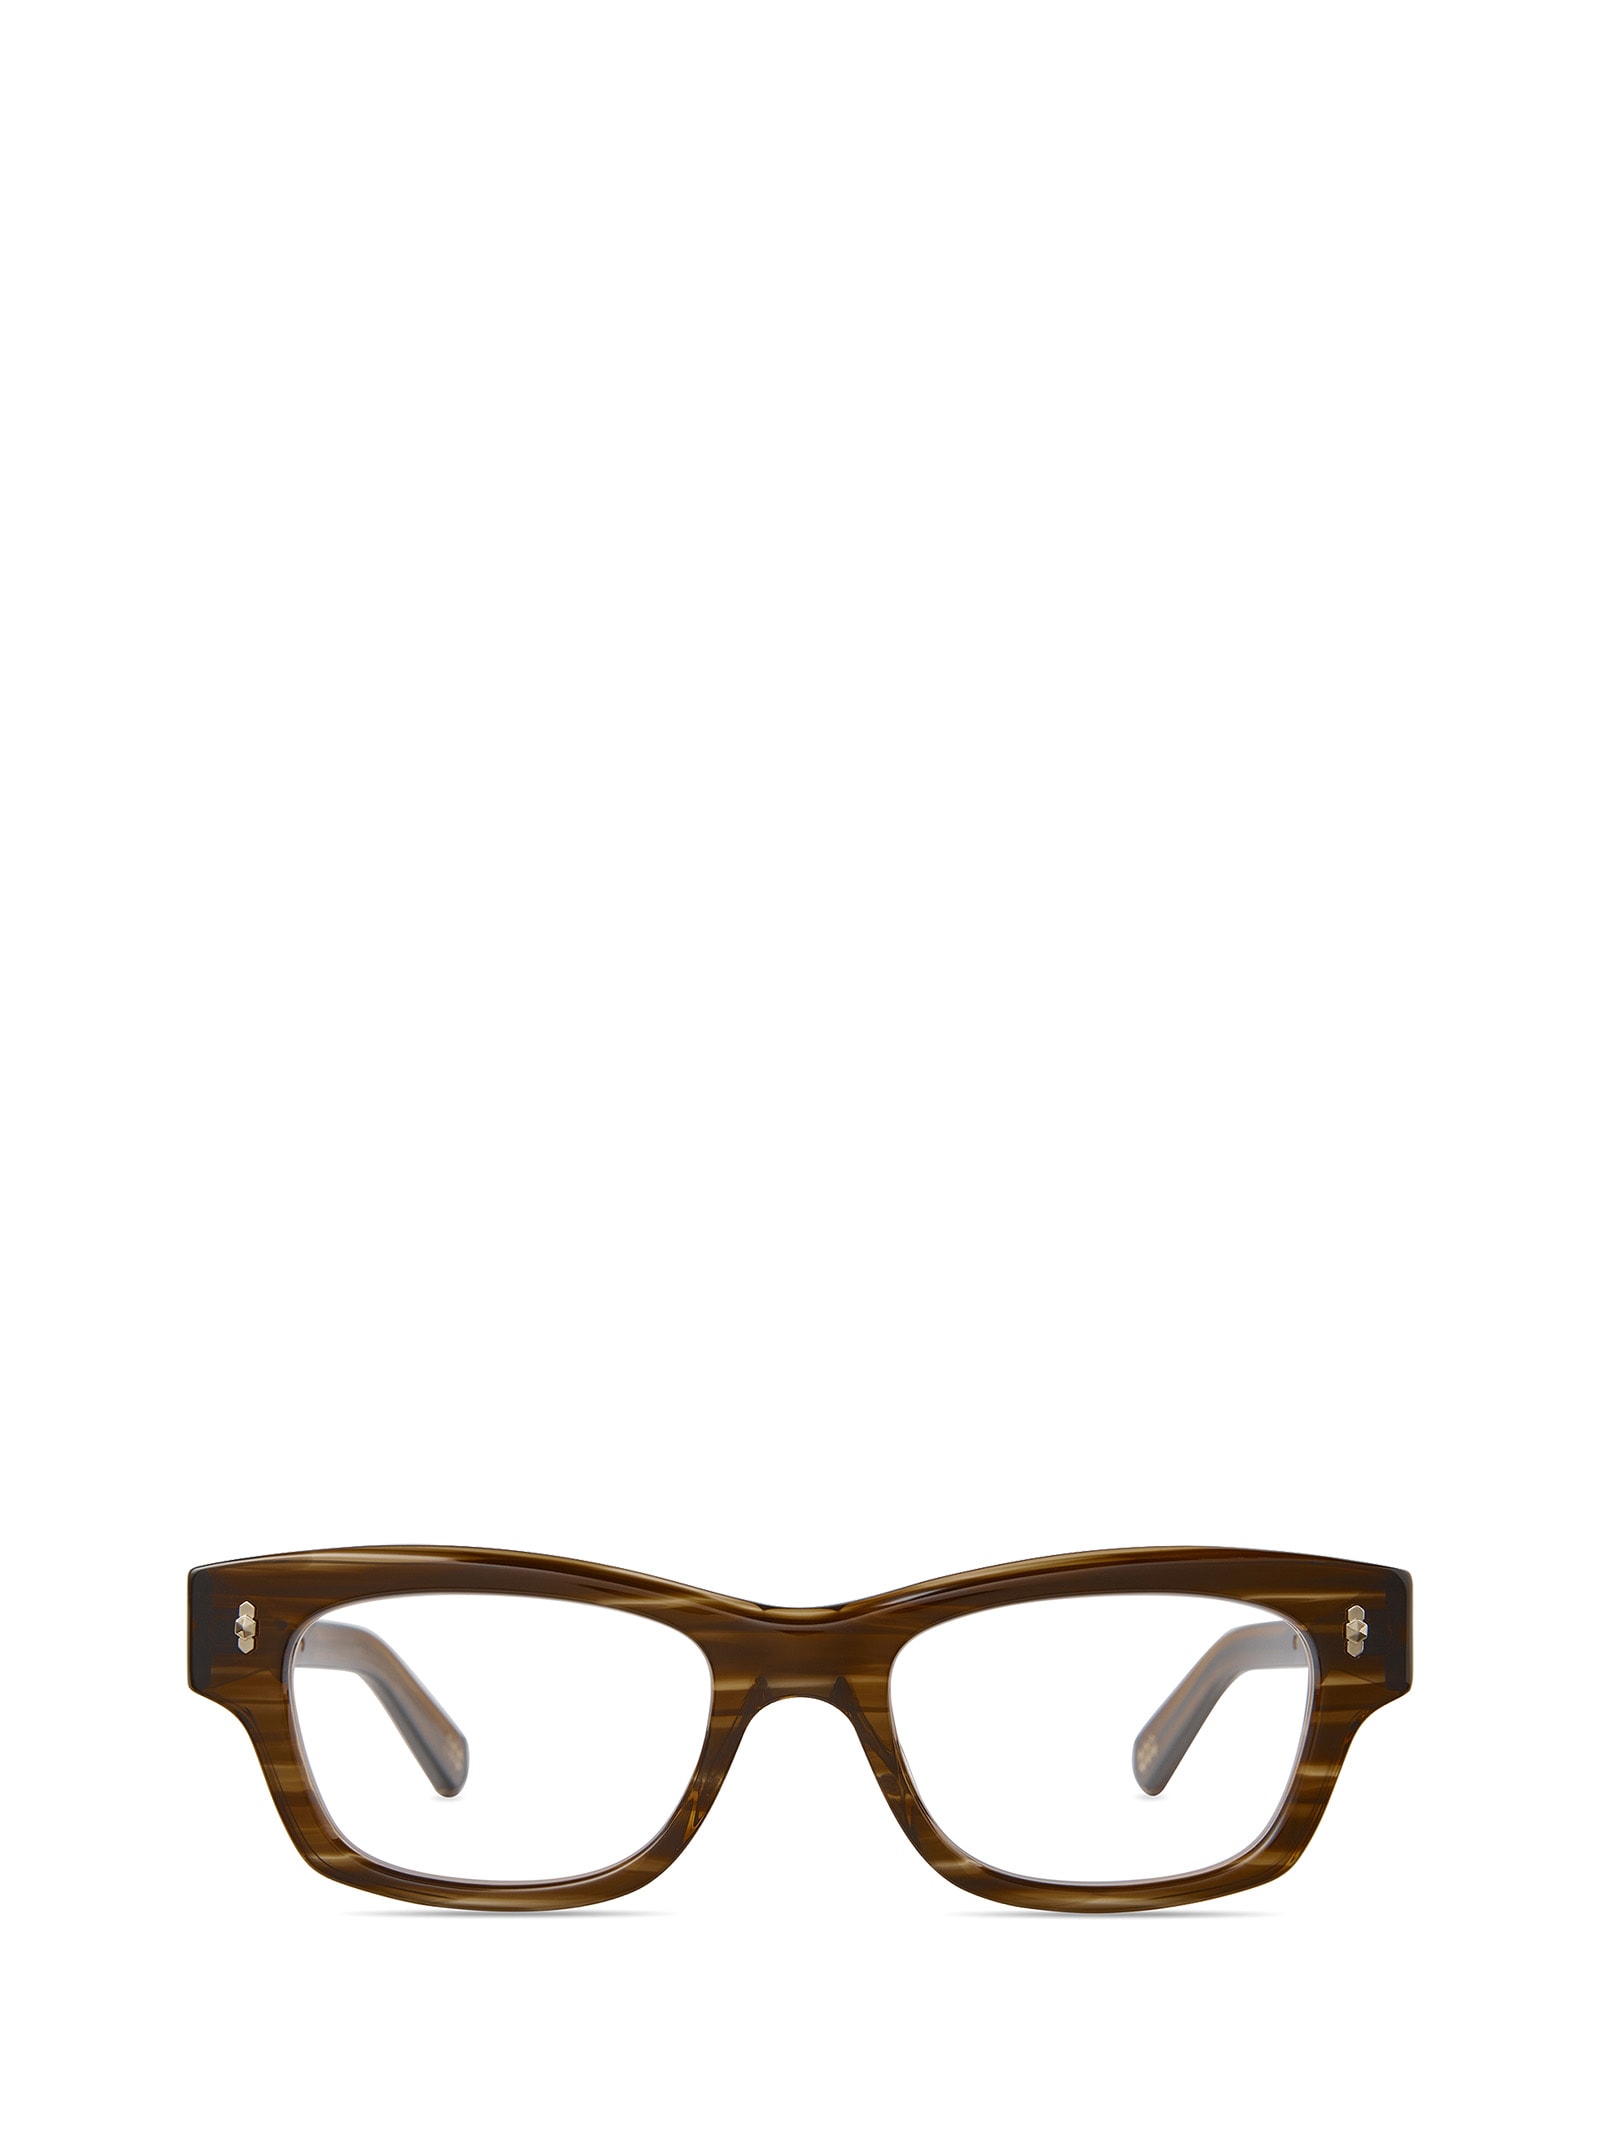 Mr Leight Antoine C Tobacco-white Gold Glasses